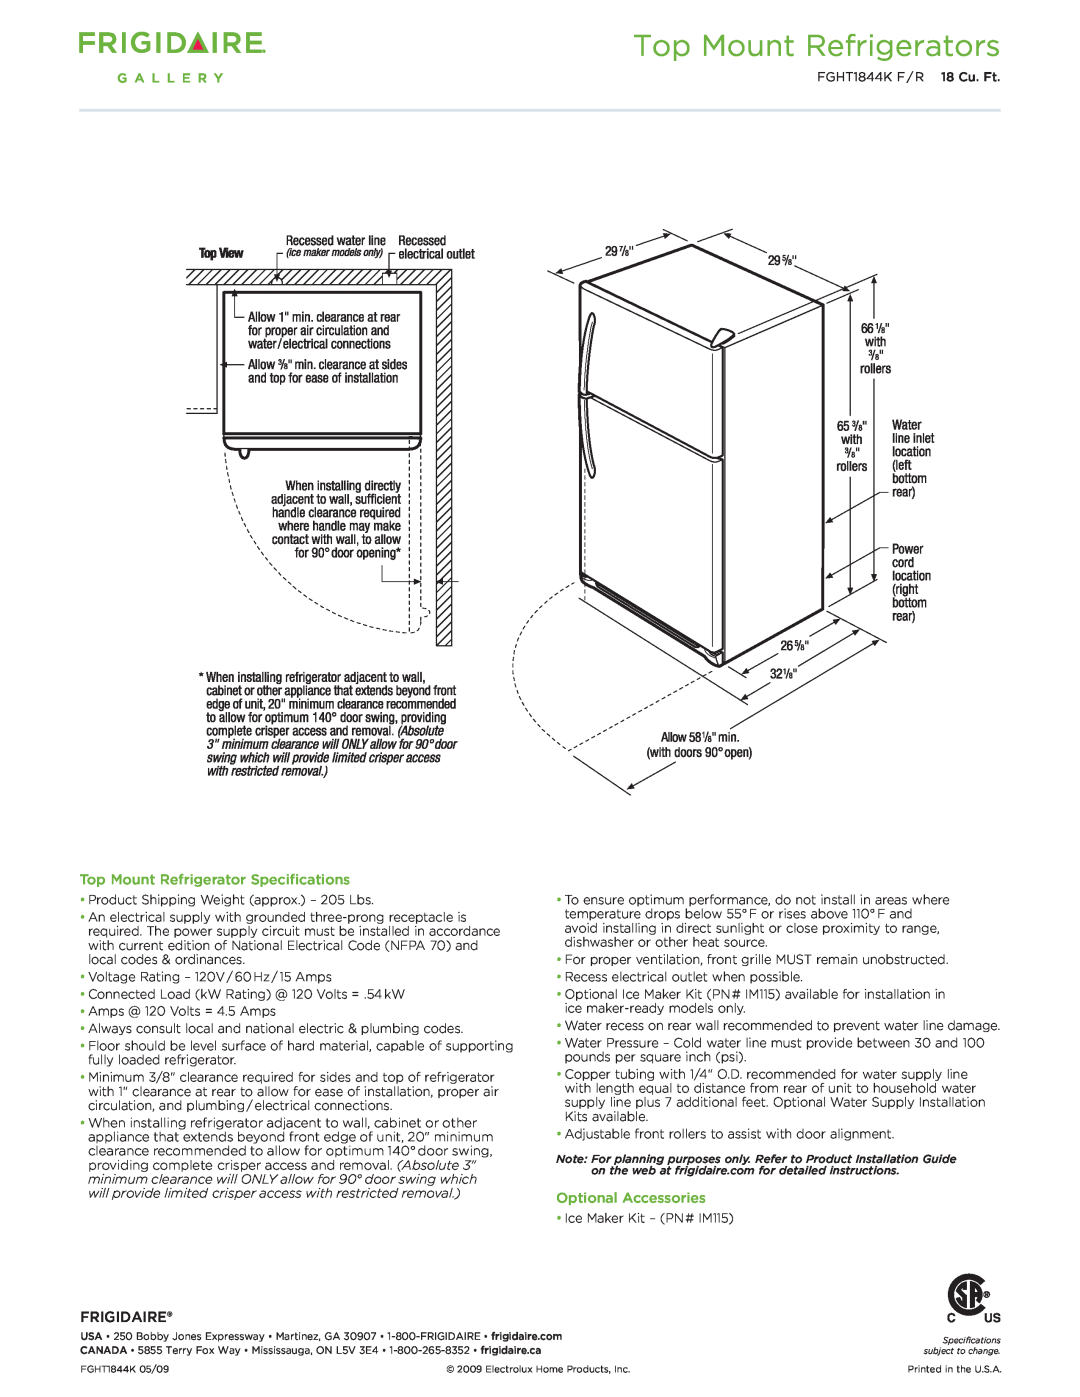 Frigidaire FGHT1844K Top Mount Refrigerator Specifications, Optional Accessories, Frigidaire, Top Mount Refrigerators 